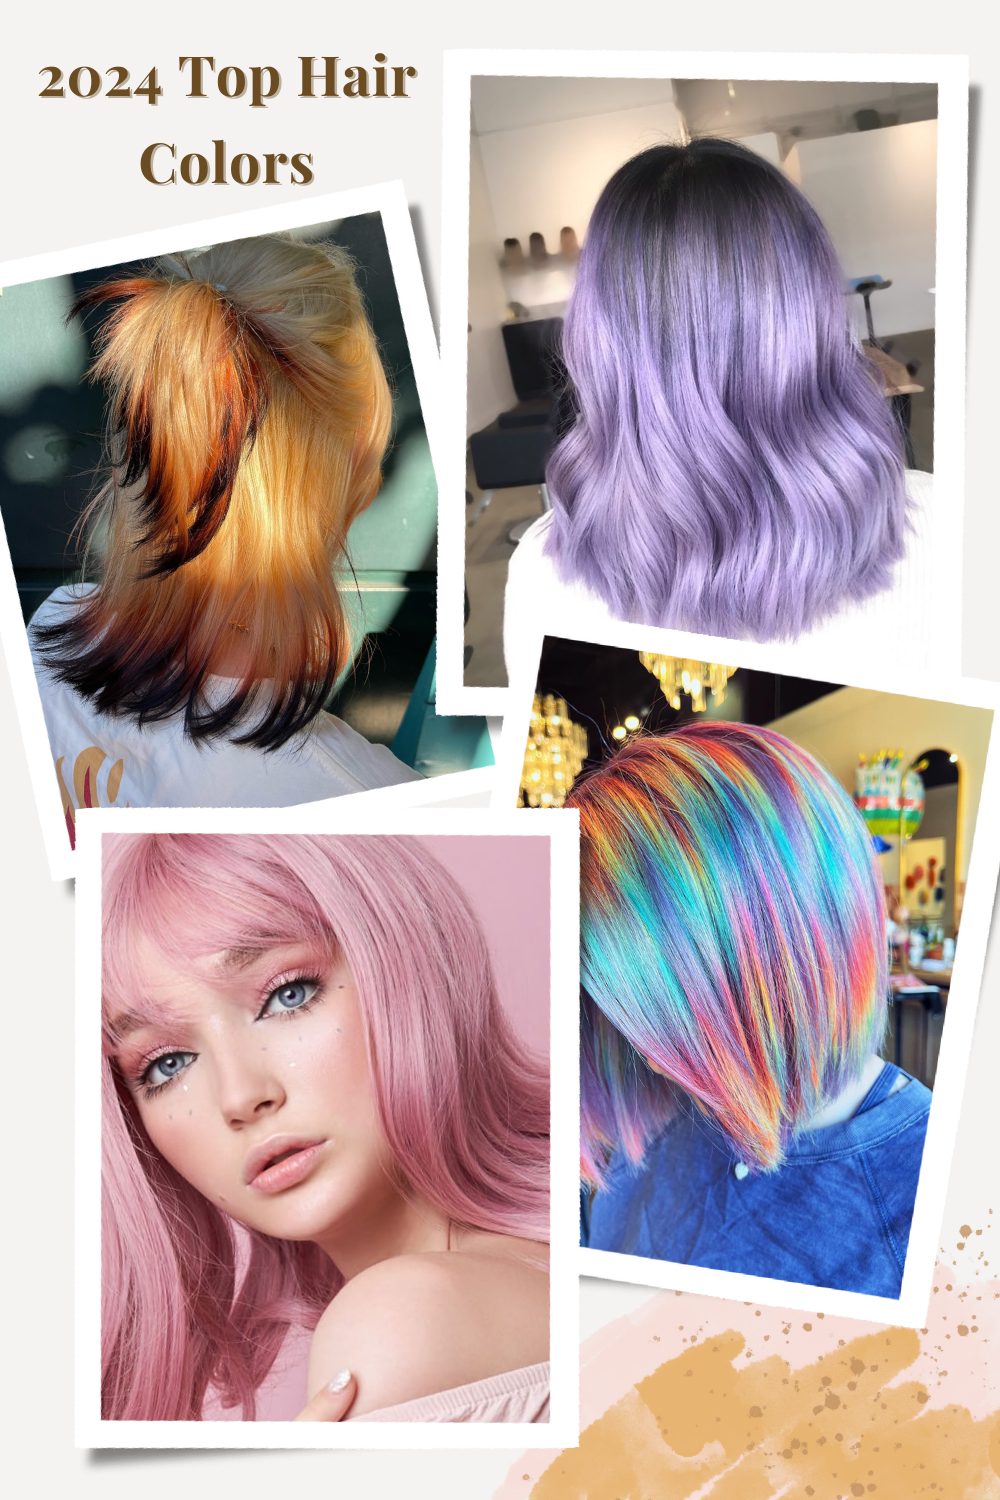 2024 Top Hair Colors